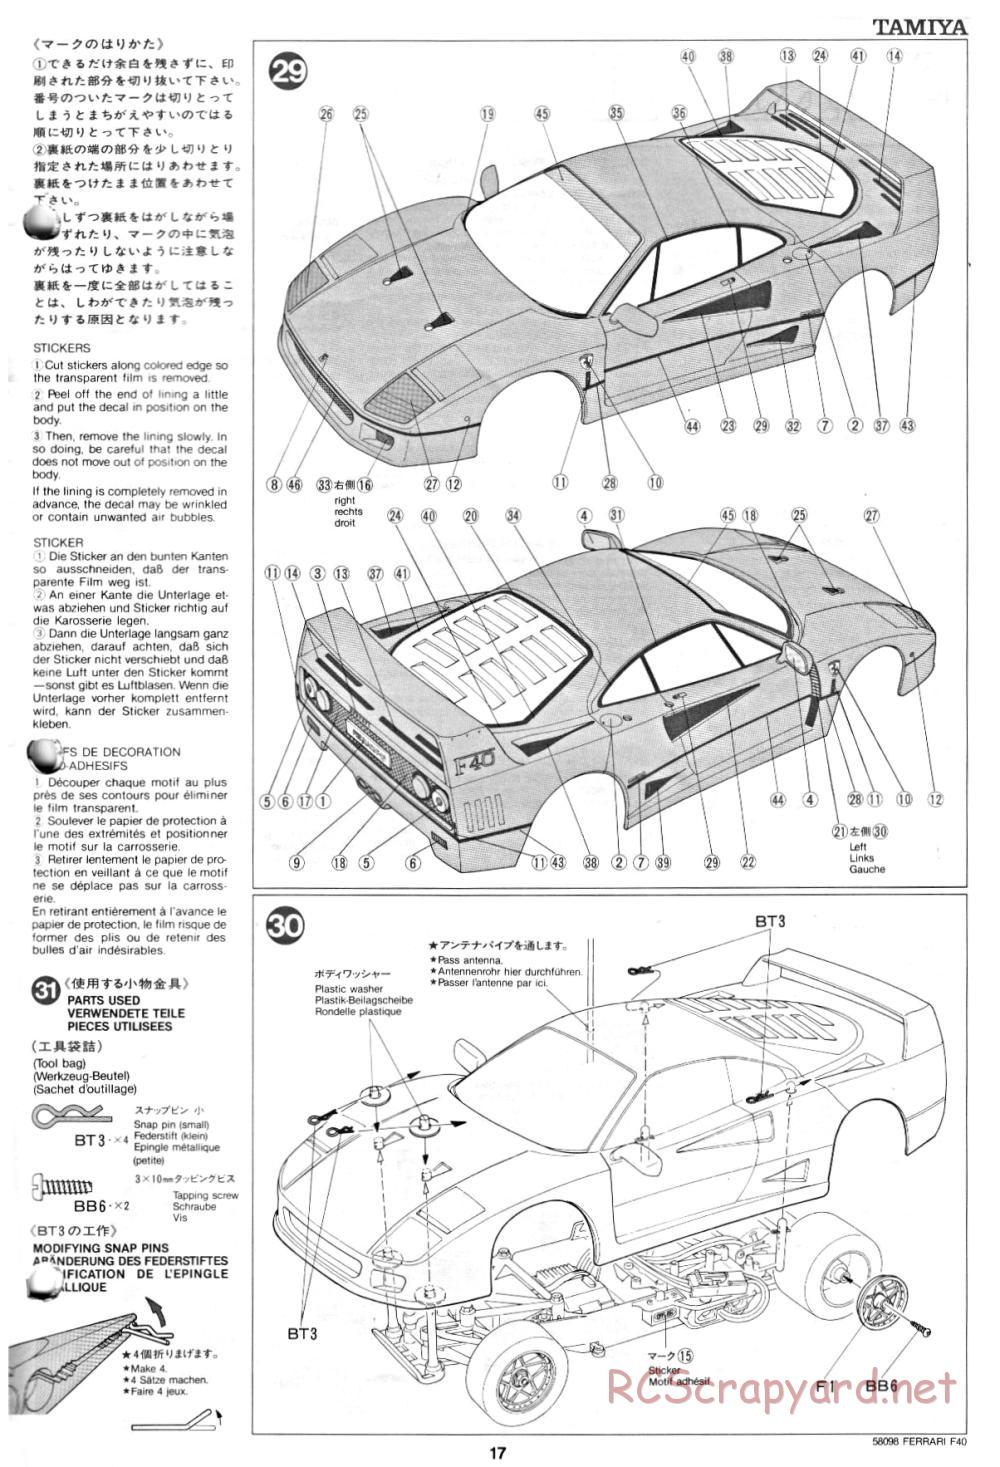 Tamiya - Ferrari F40 - 58098 - Manual - Page 17